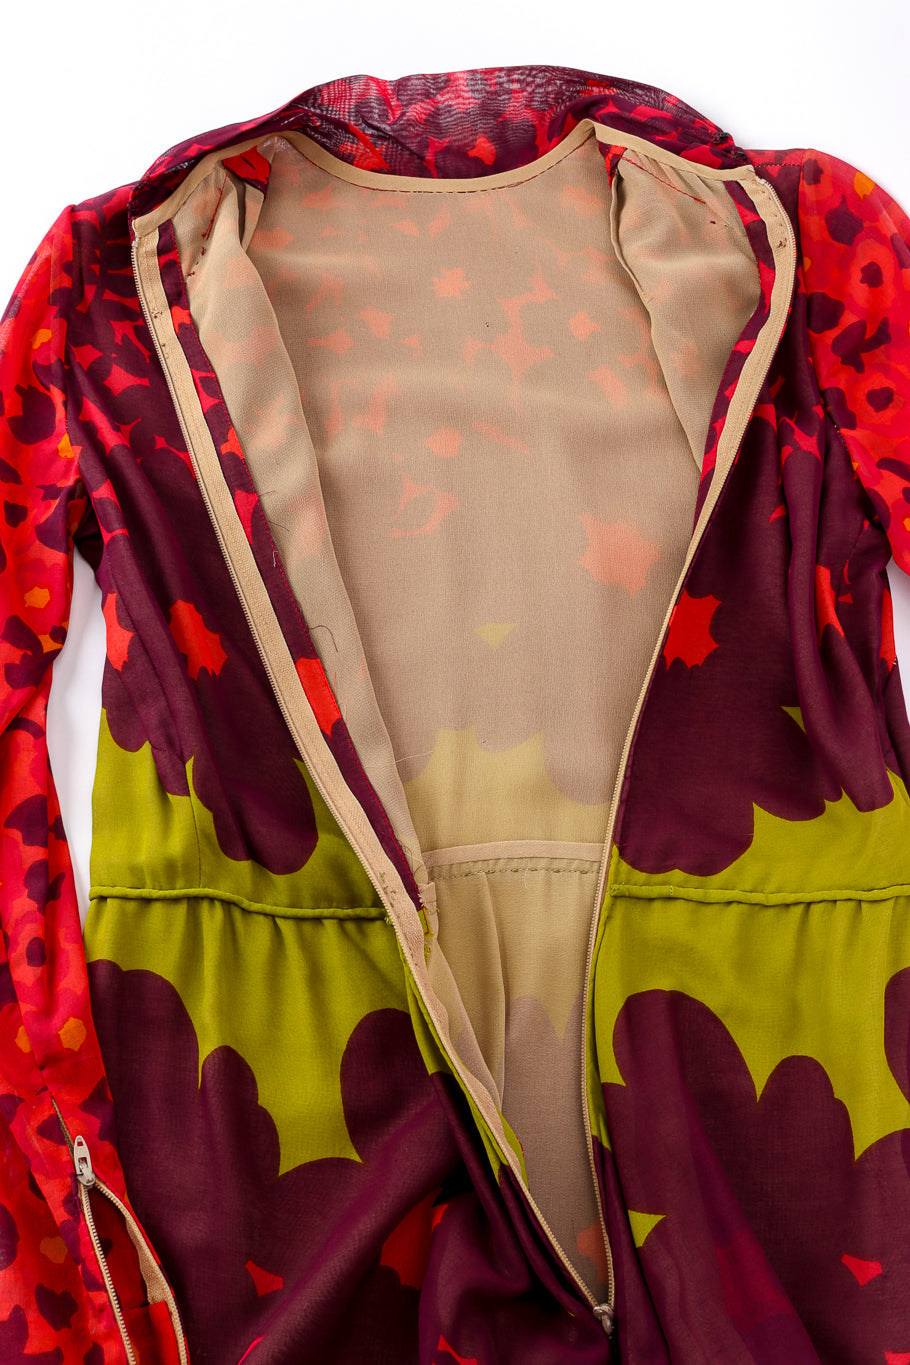 Vintage Bergdorf Goodman Poppy Print Turtleneck Dress back unzipped @recess la